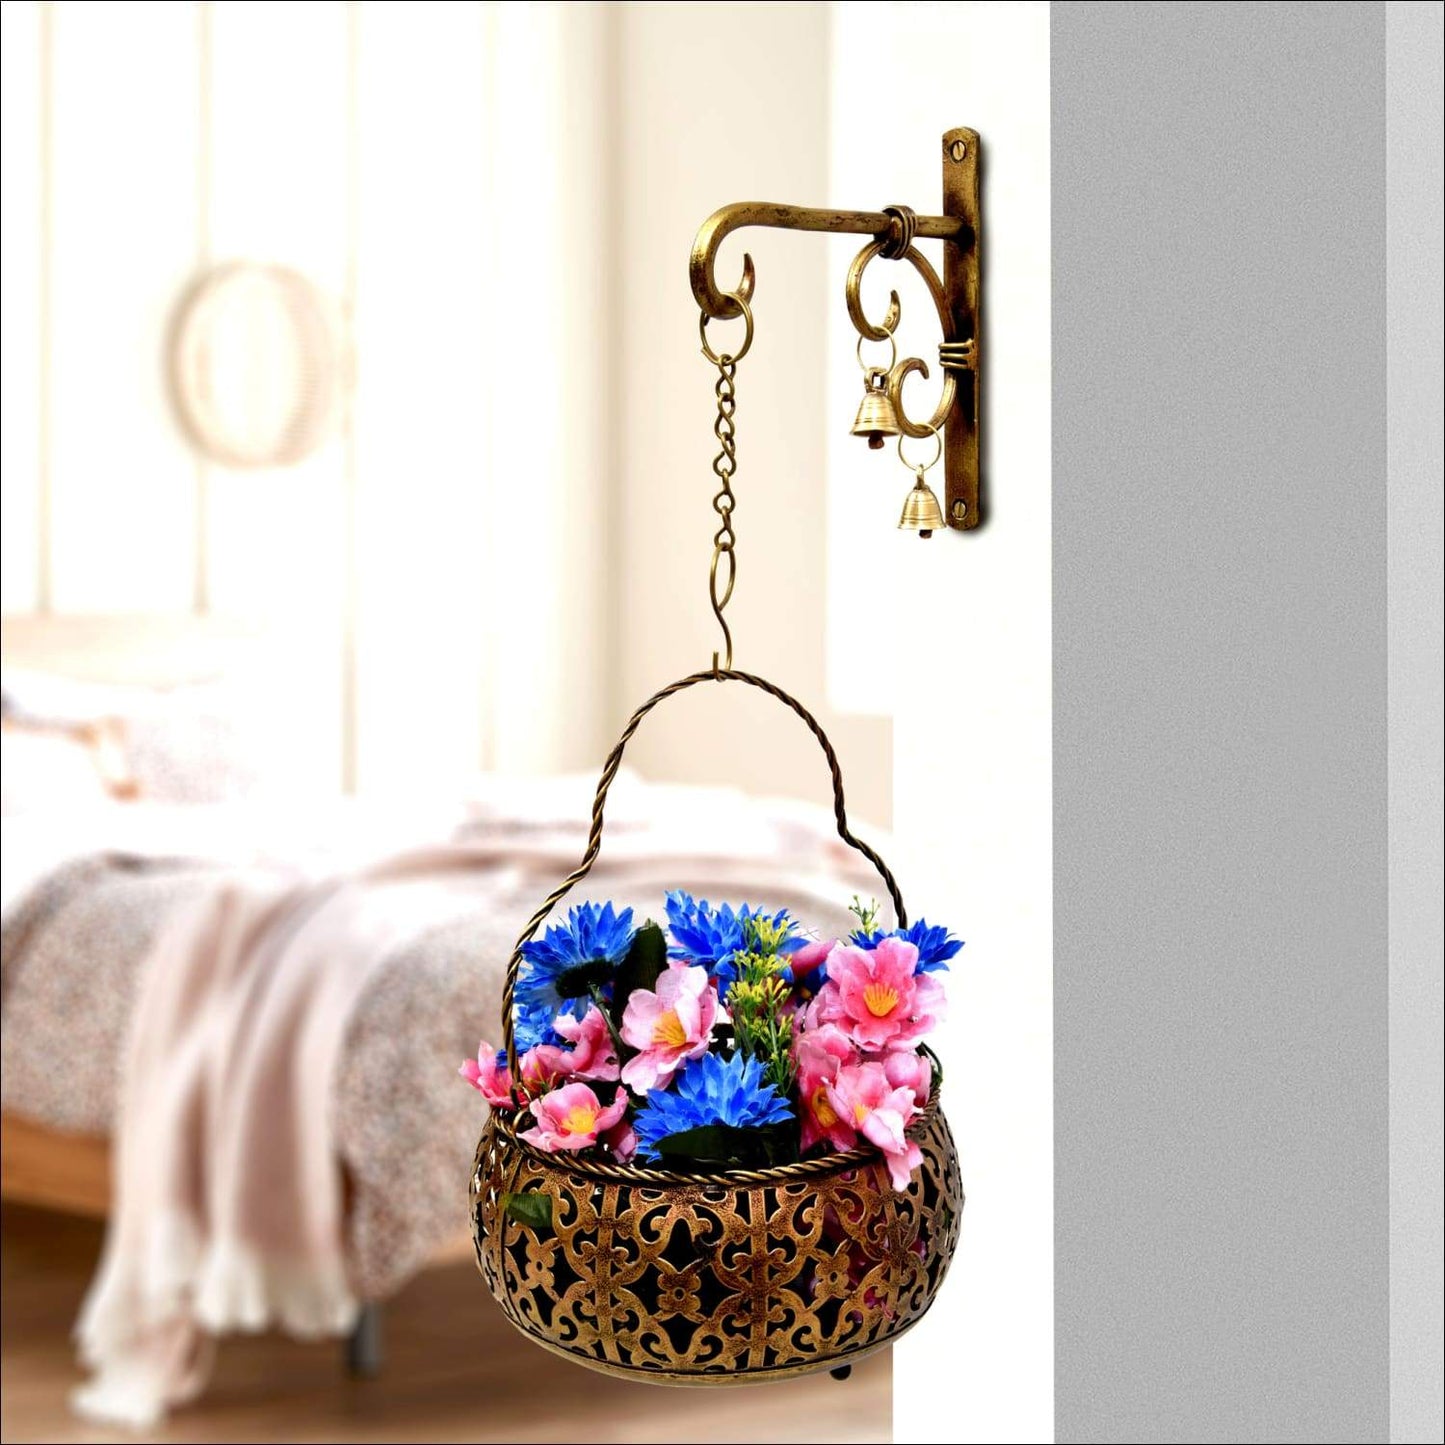 decorative hanging flower baskets